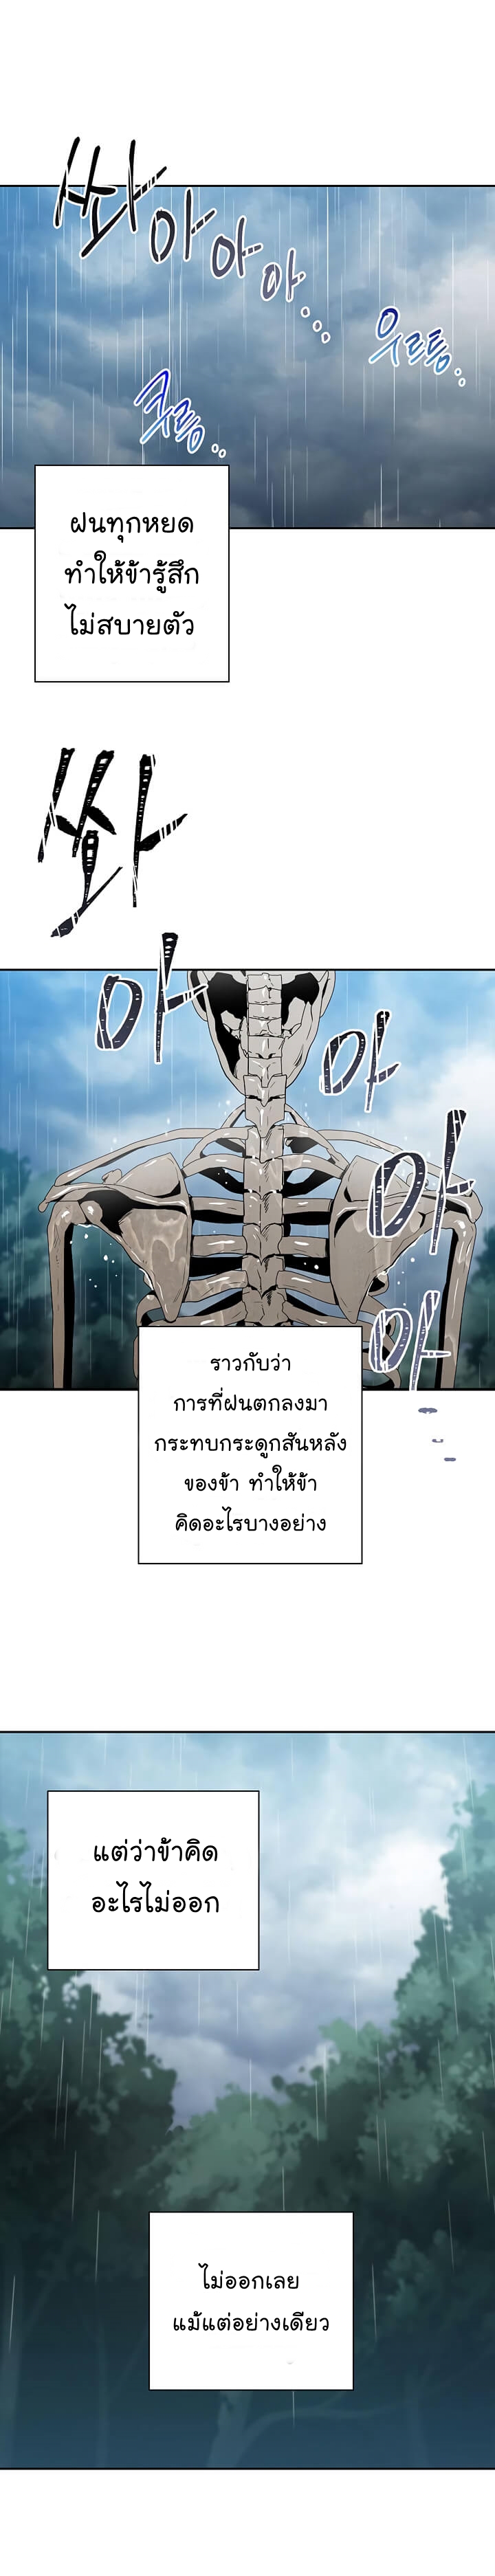 Skeleton Soldier 88 16